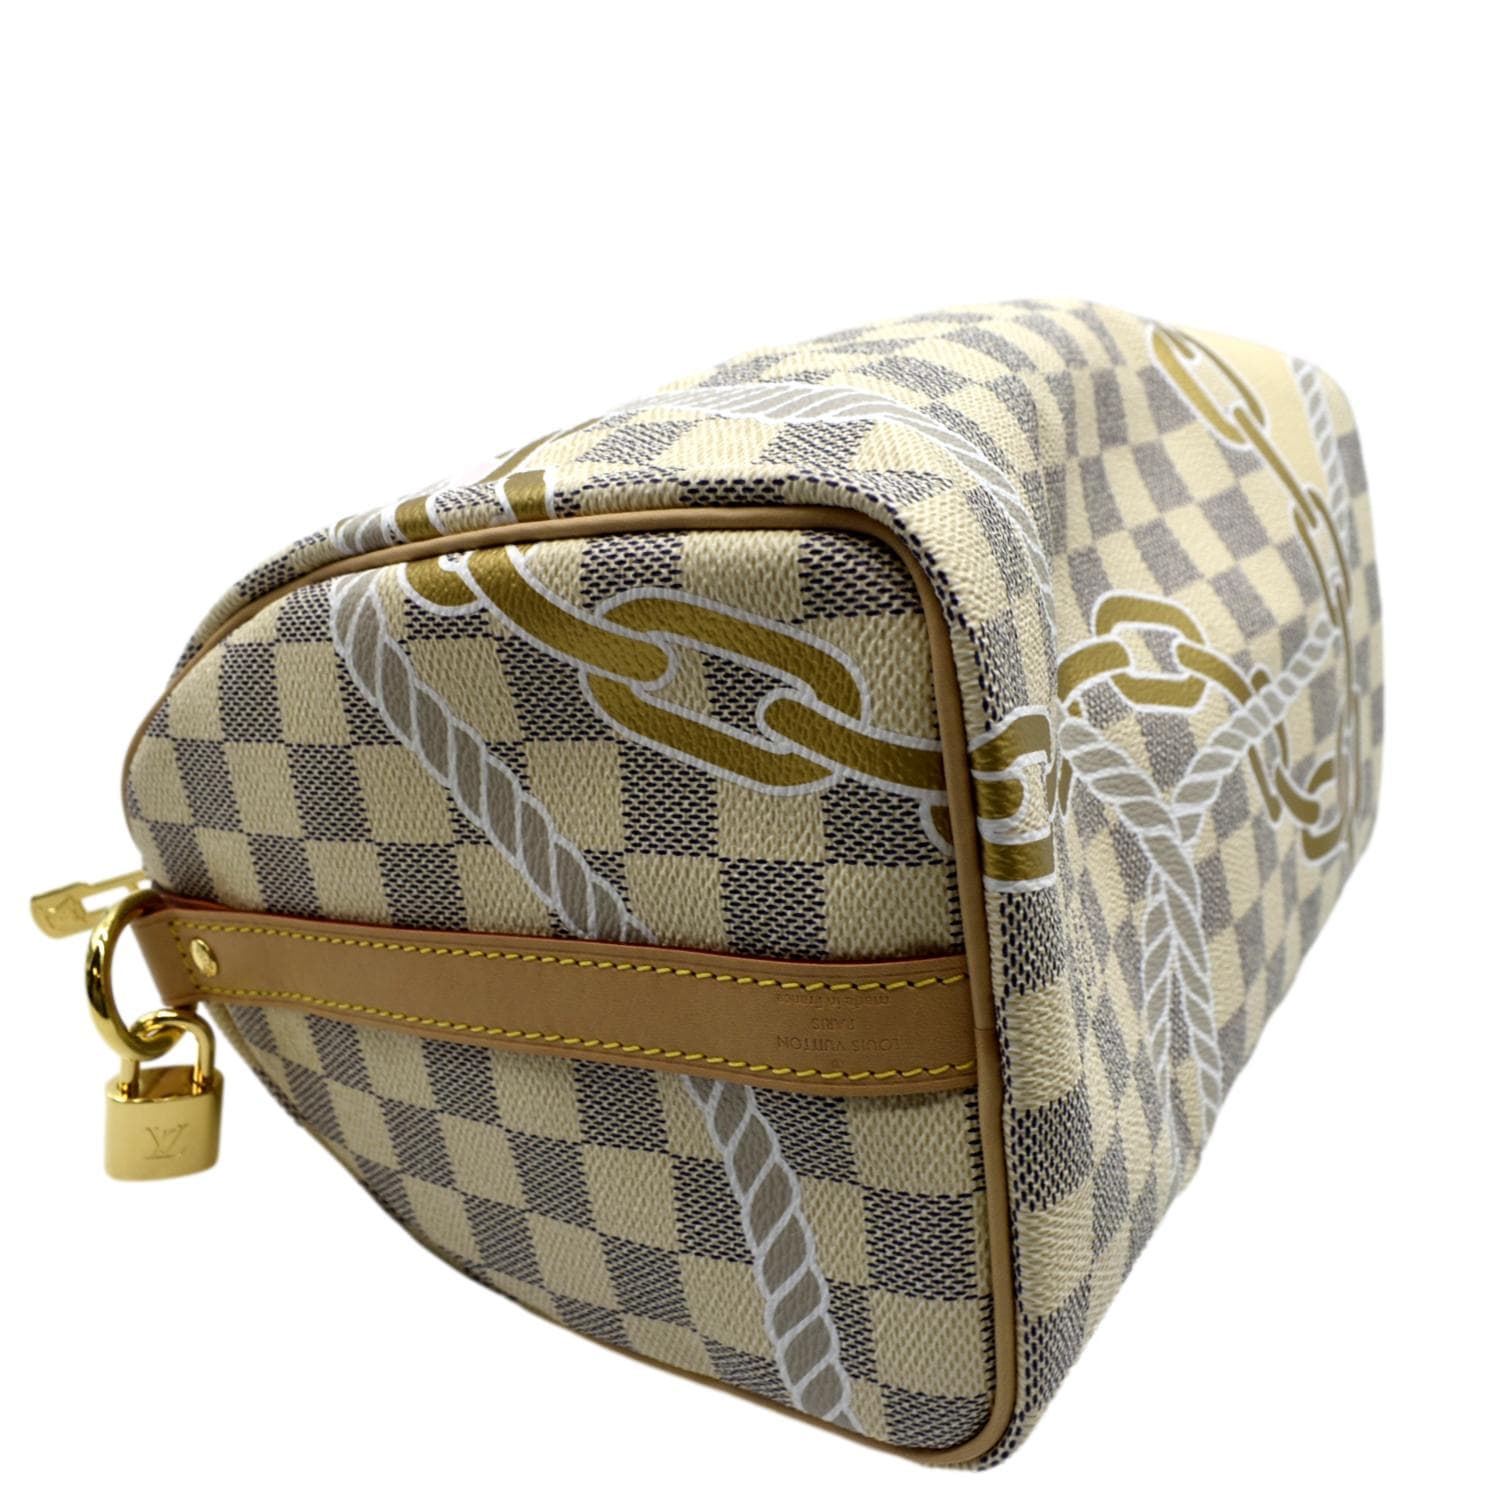 Louis Vuitton Speedy Bandouliere Bag Limited Edition Nautical